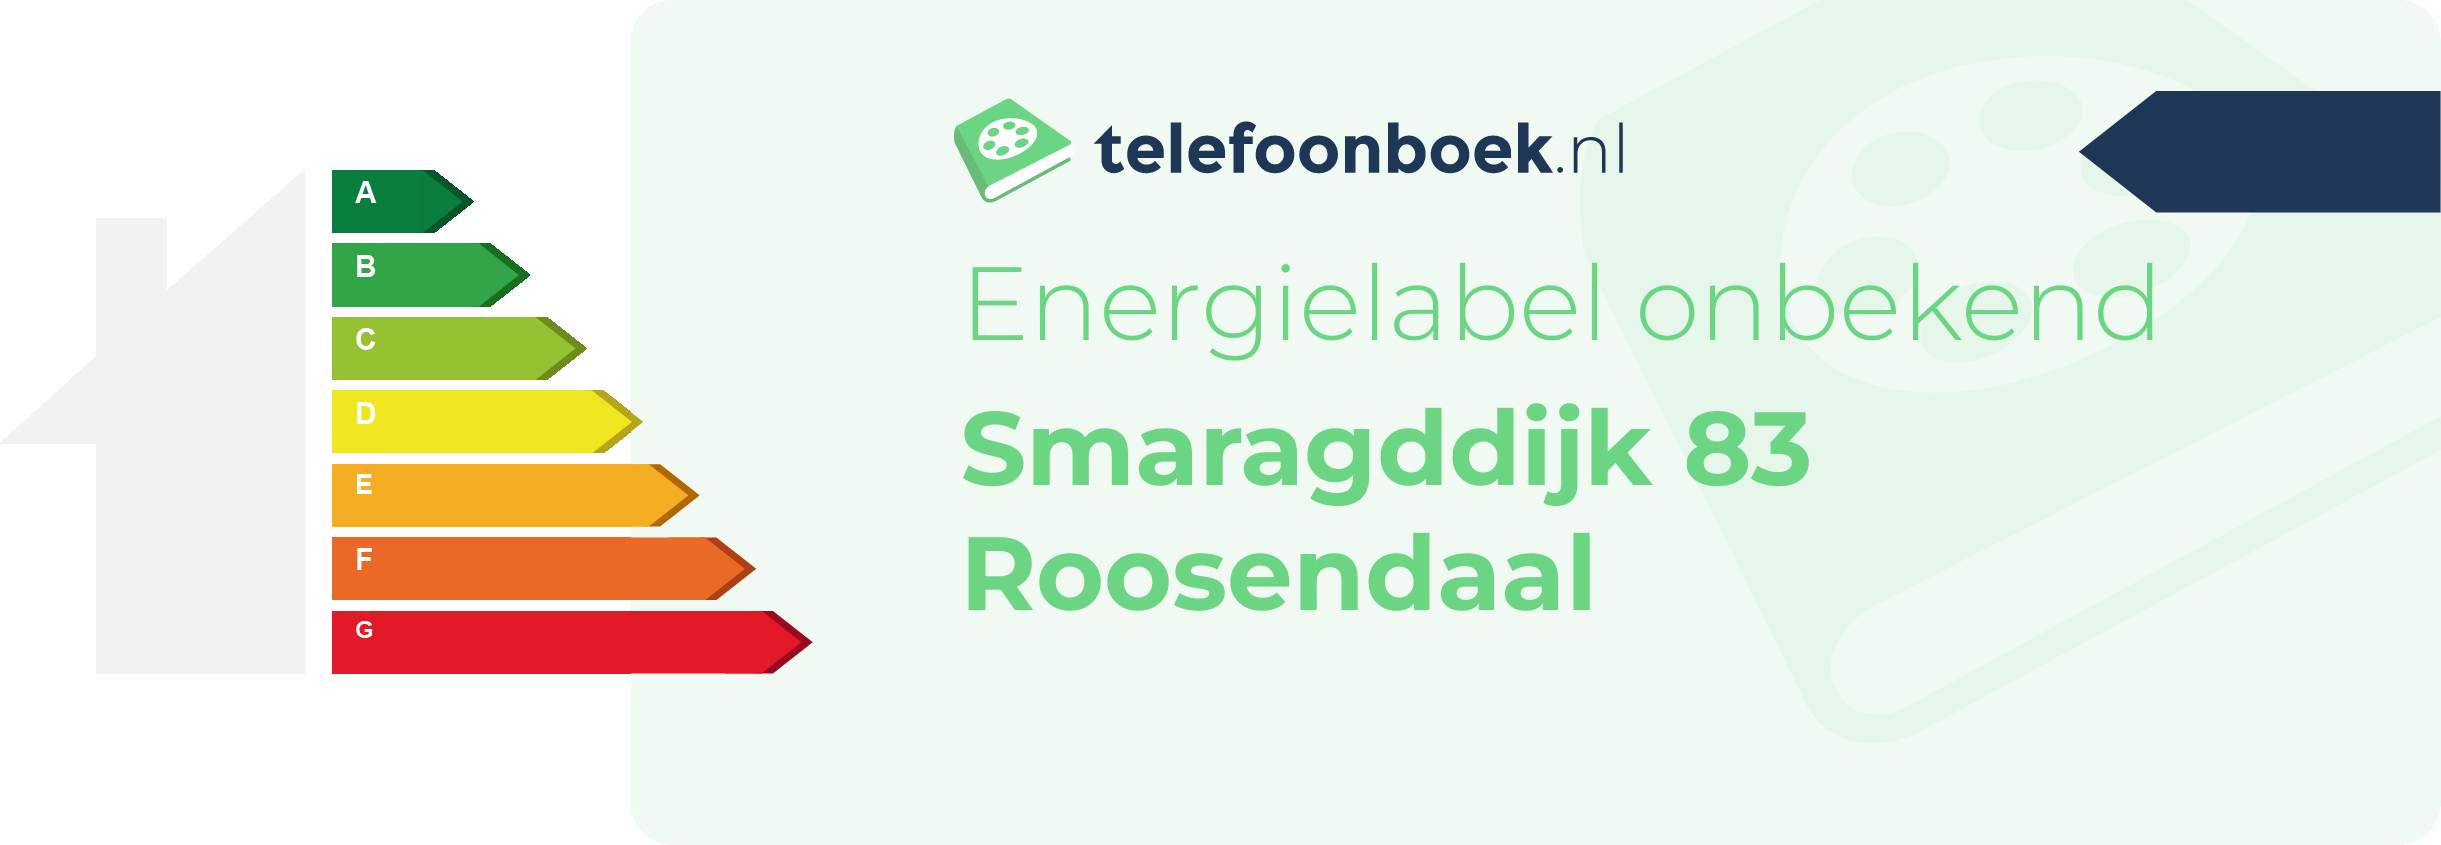 Energielabel Smaragddijk 83 Roosendaal